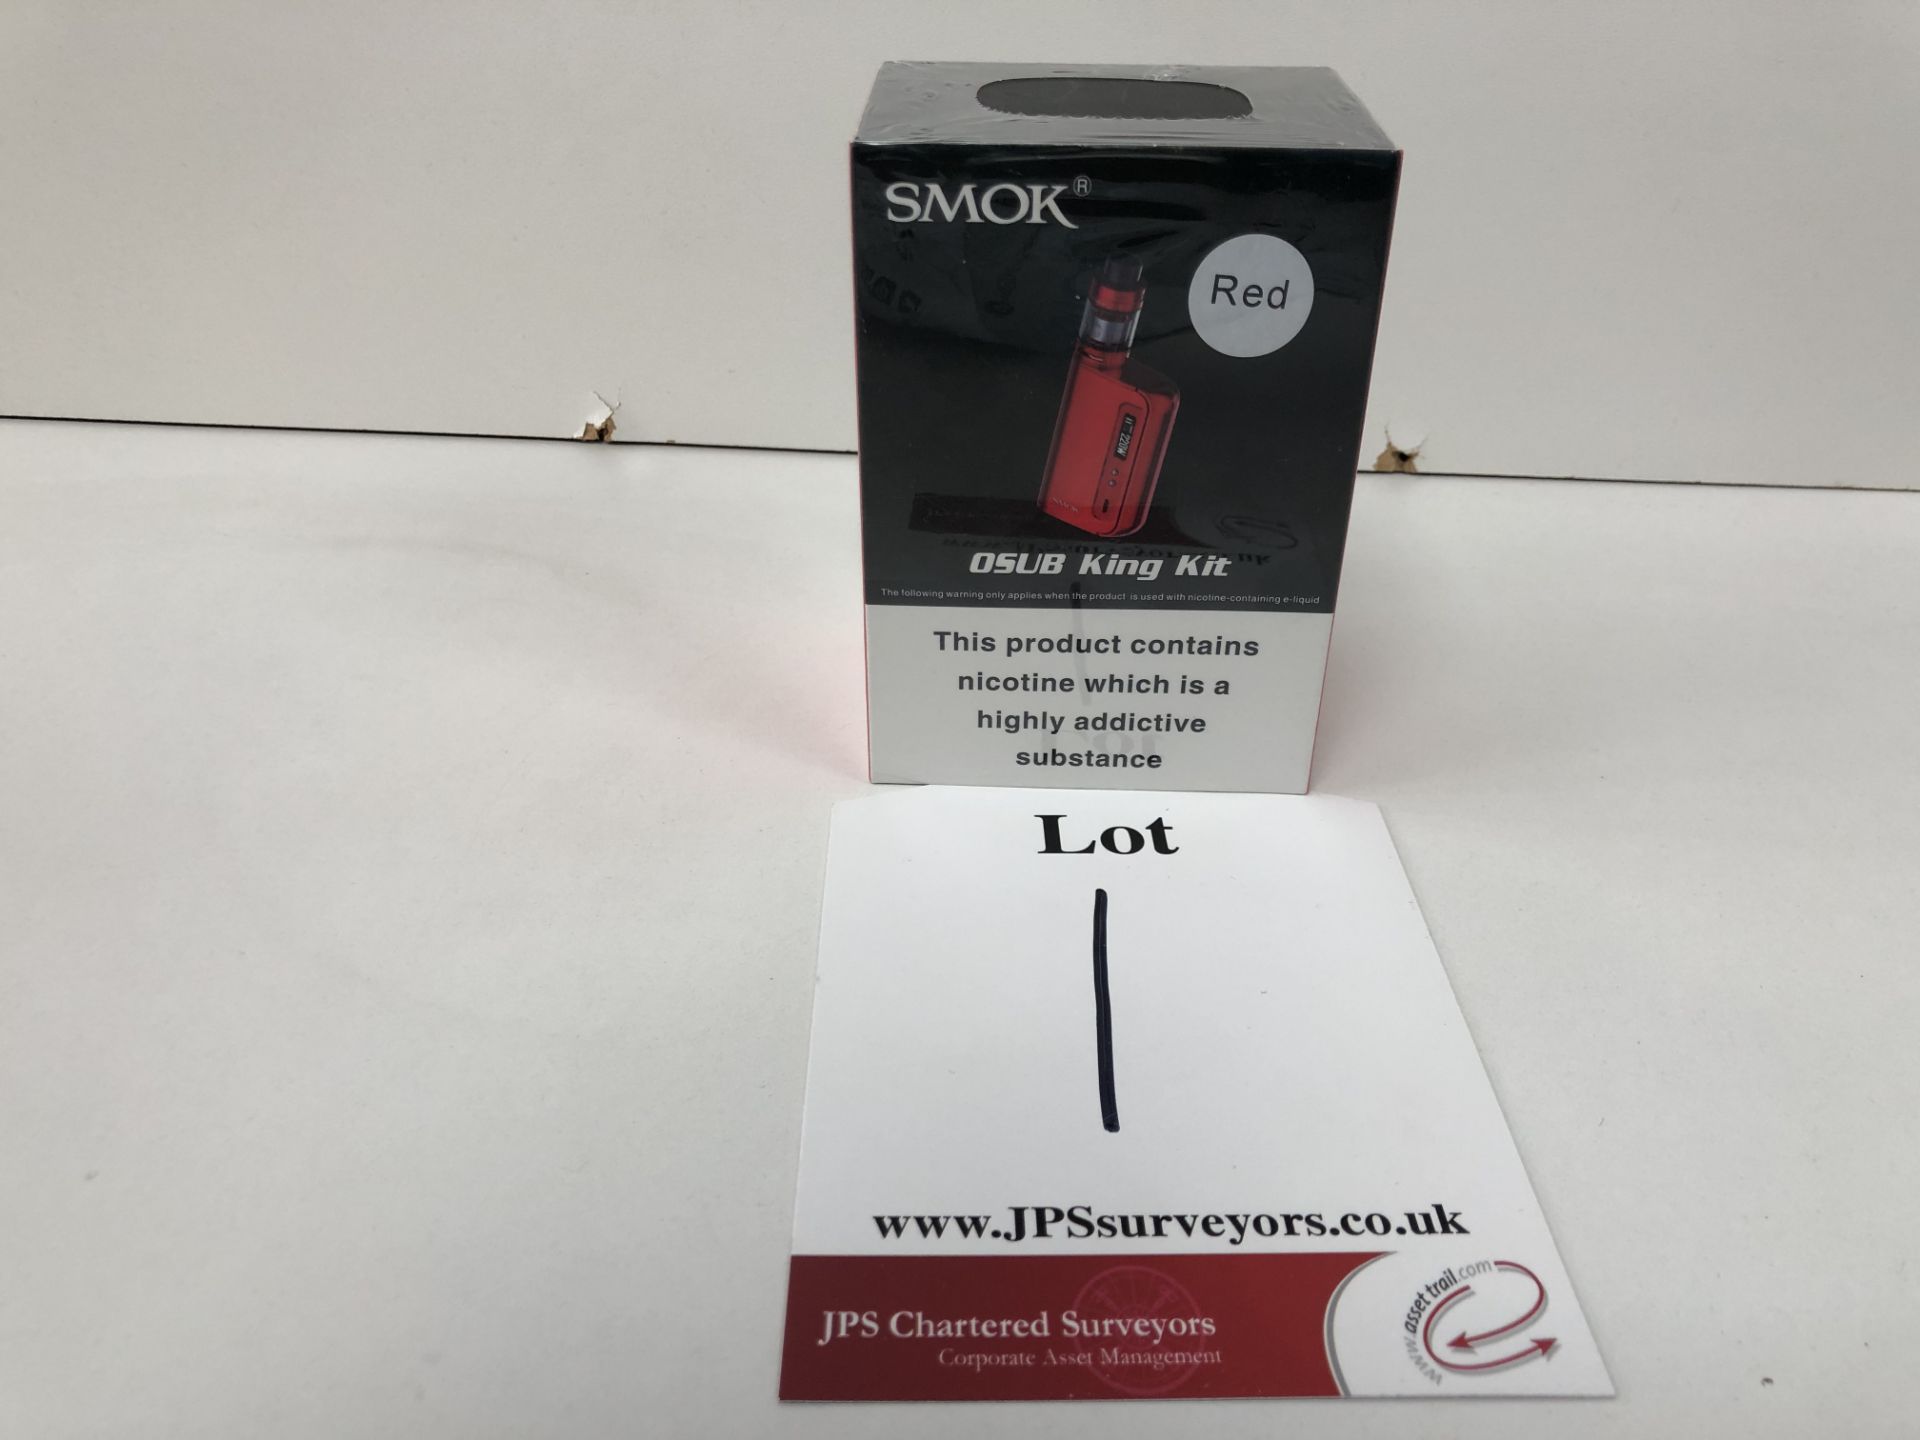 1 x BNIB Smok Red OSUB King Kit |6970232214299